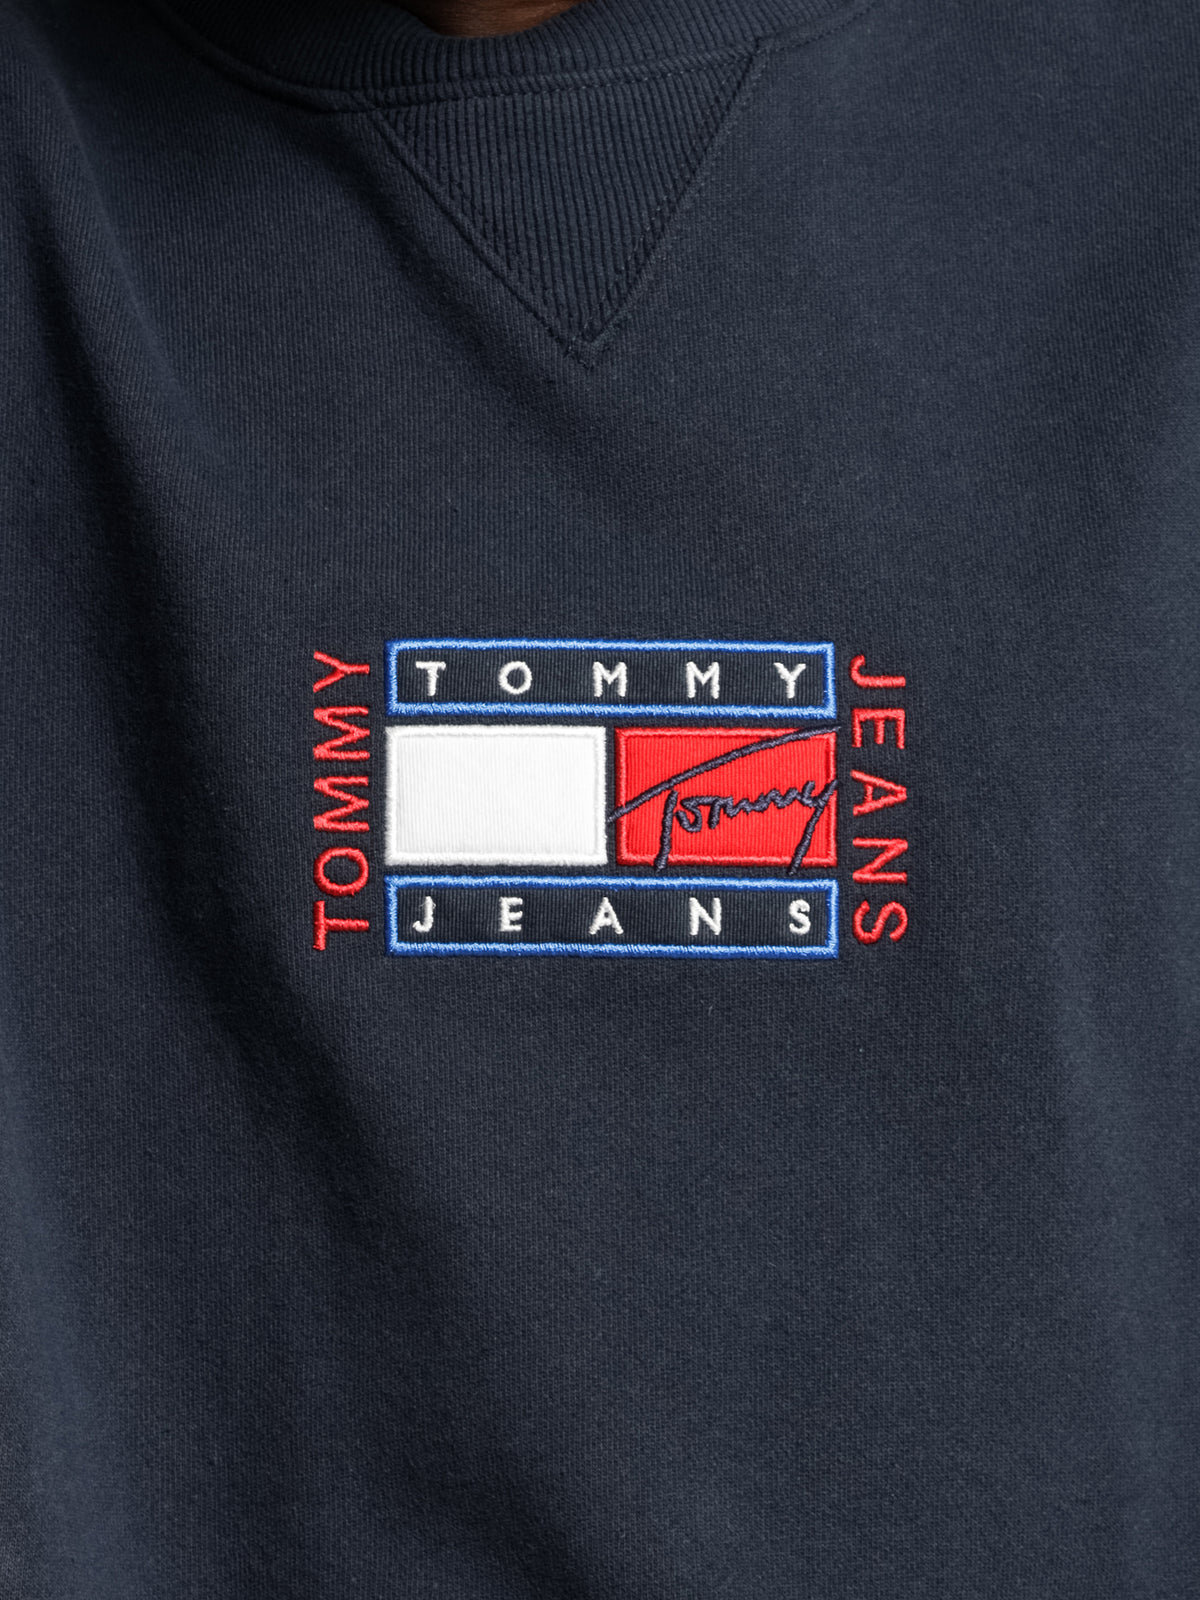 Timeless Tommy Sweatshirt in Navy